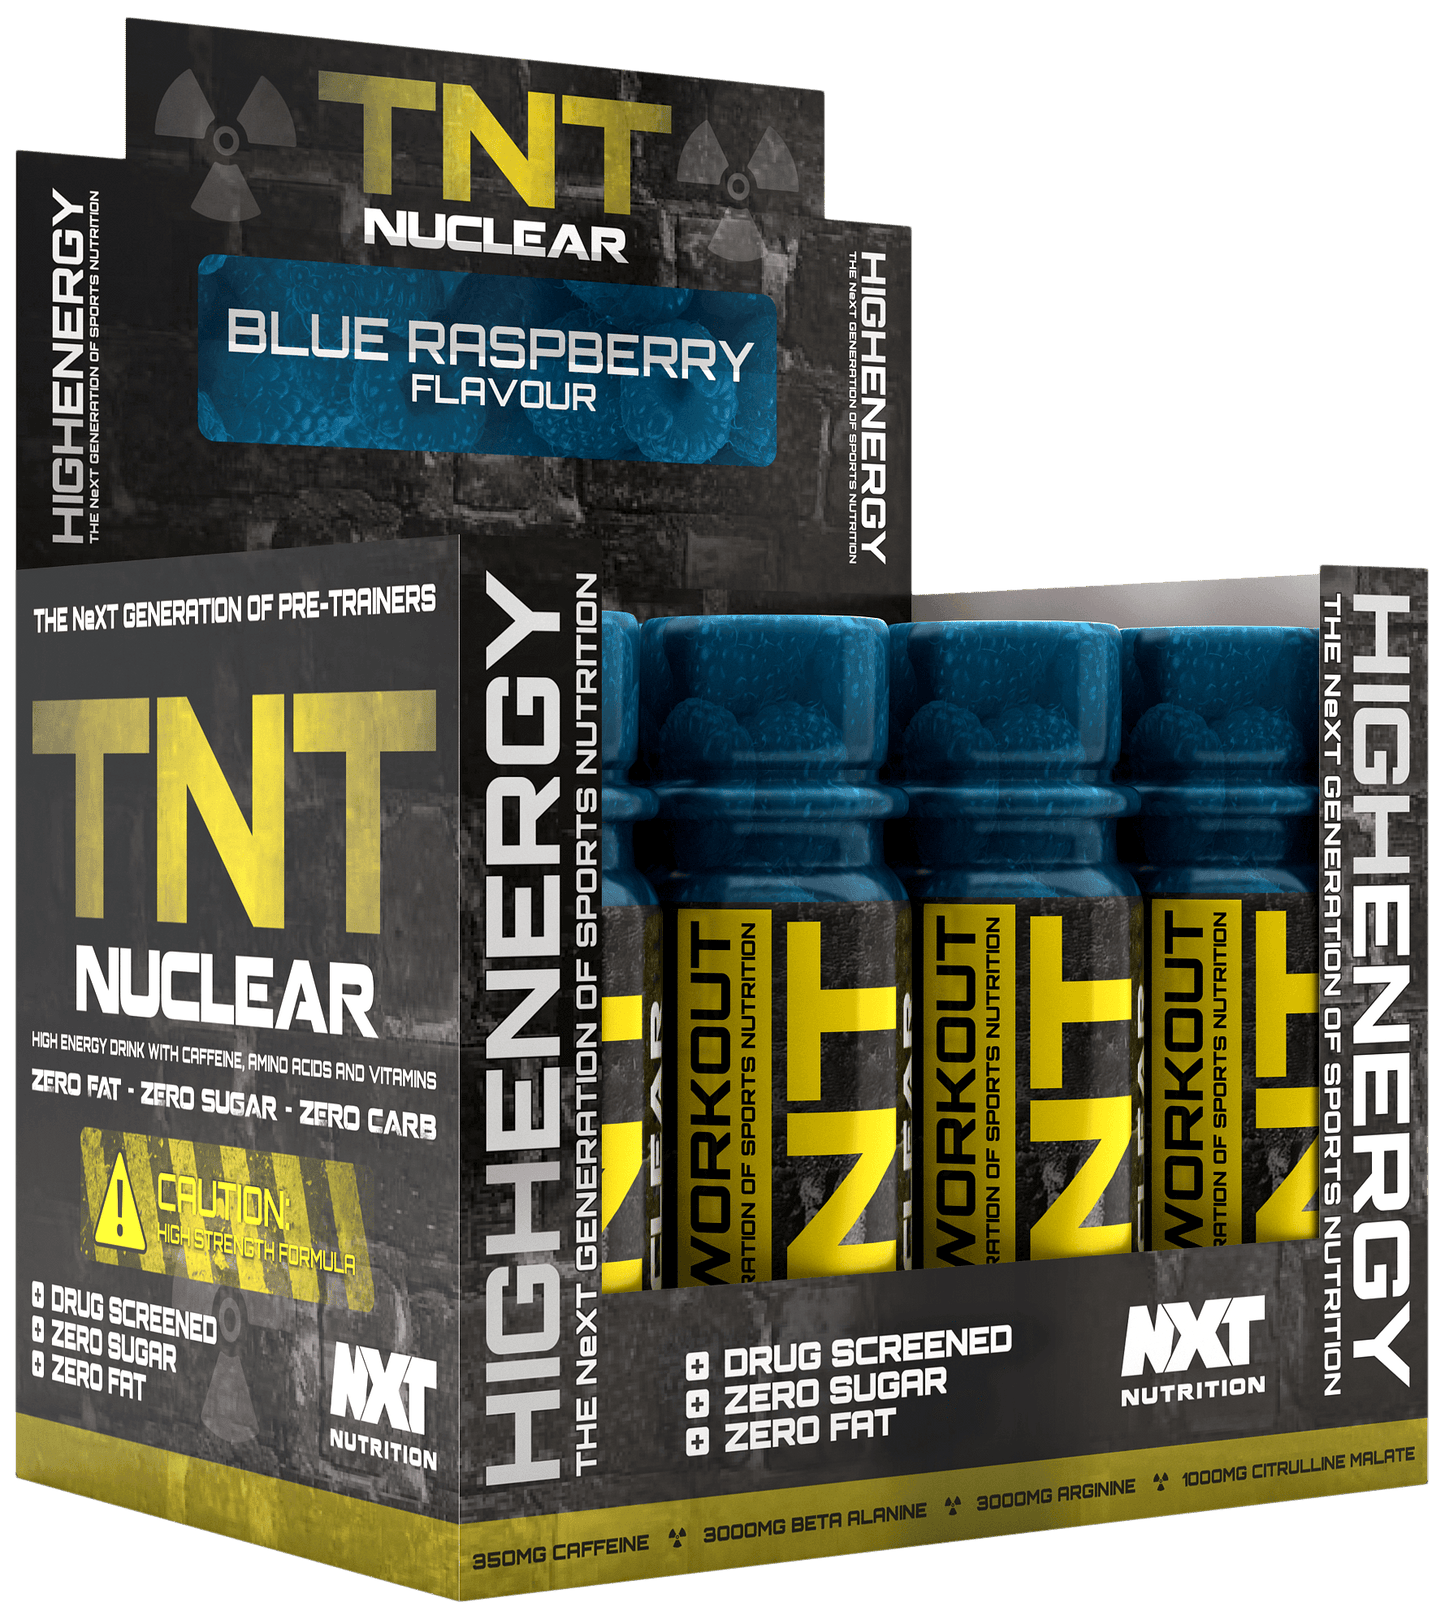 NXT Nutrition TNT Nuclear Shots 12 x 60ml - Fitness Health 